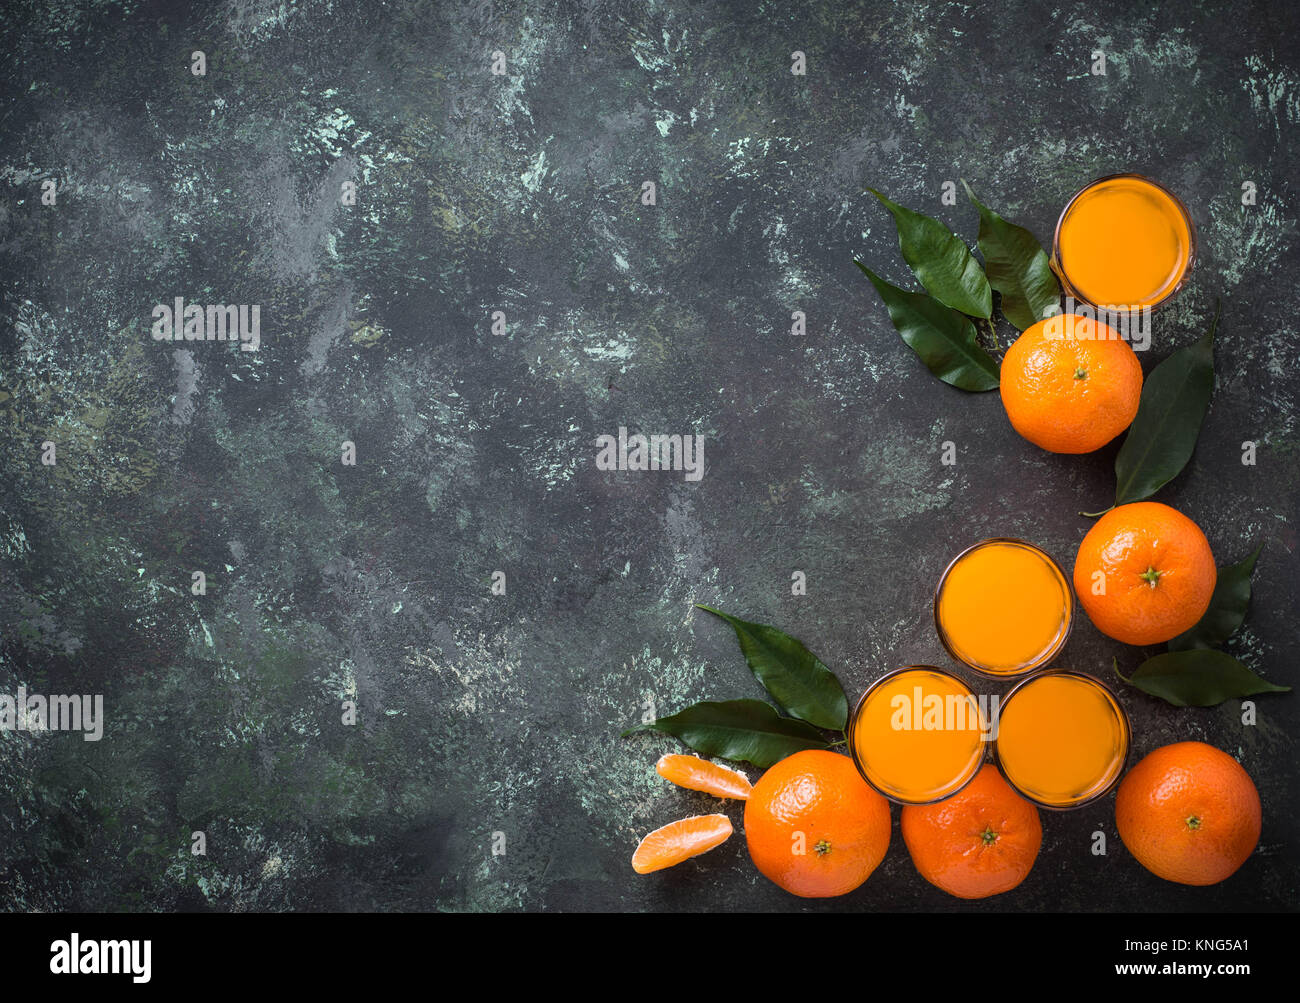 Jugo de mandarina fotografías e imágenes de alta resolución - Alamy